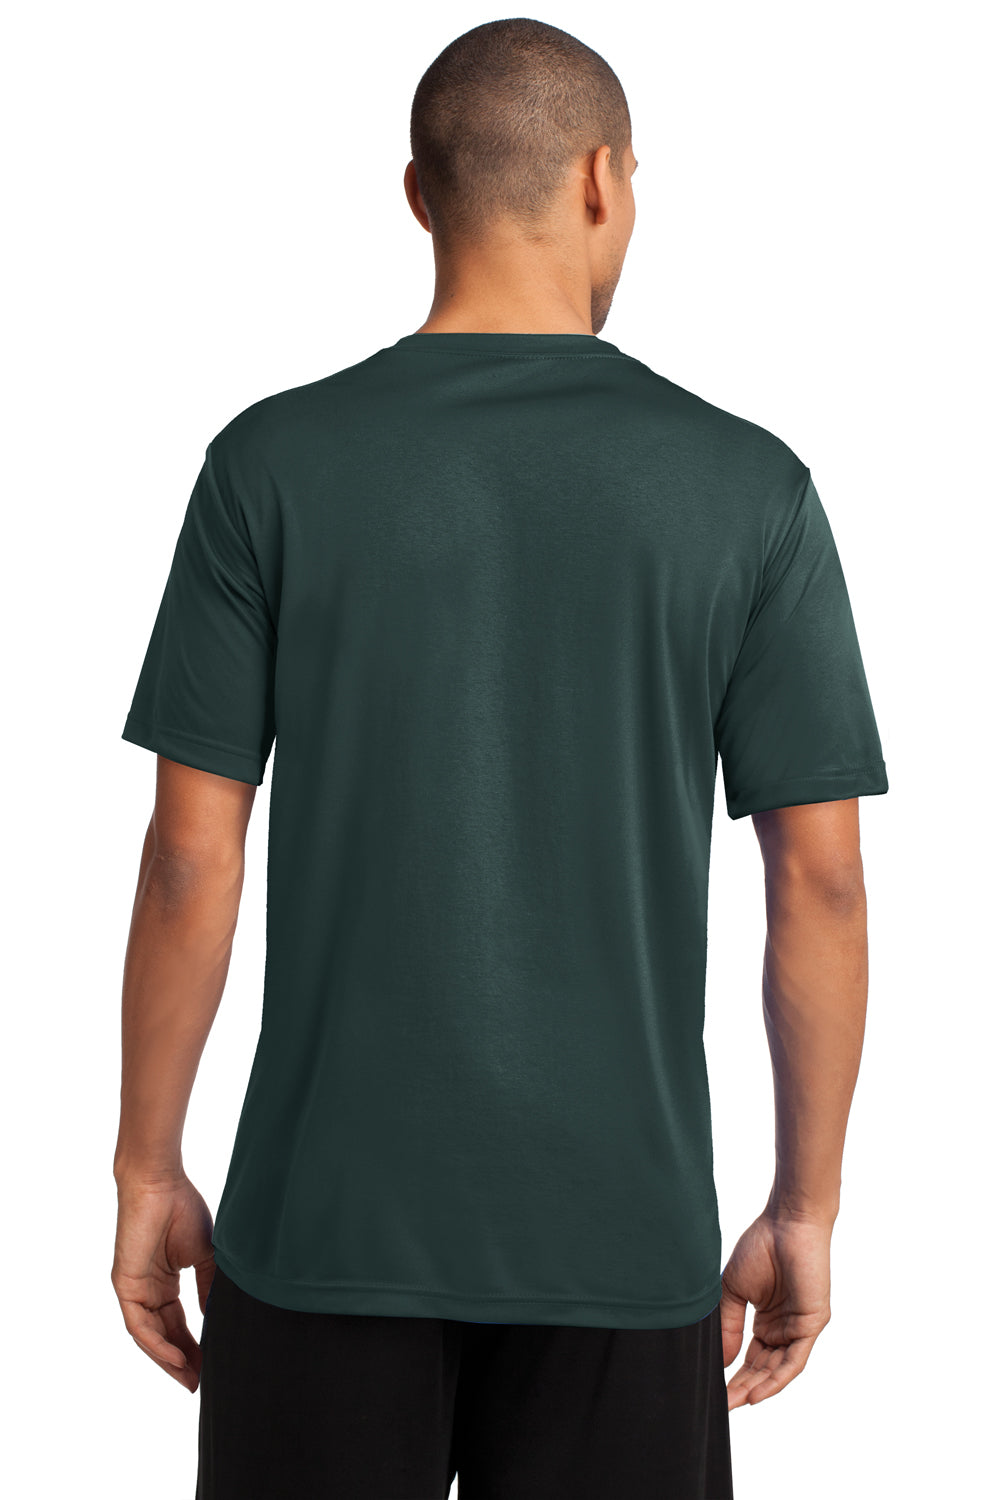 Port & Company PC380 Mens Dry Zone Performance Moisture Wicking Short Sleeve Crewneck T-Shirt Dark Green Back